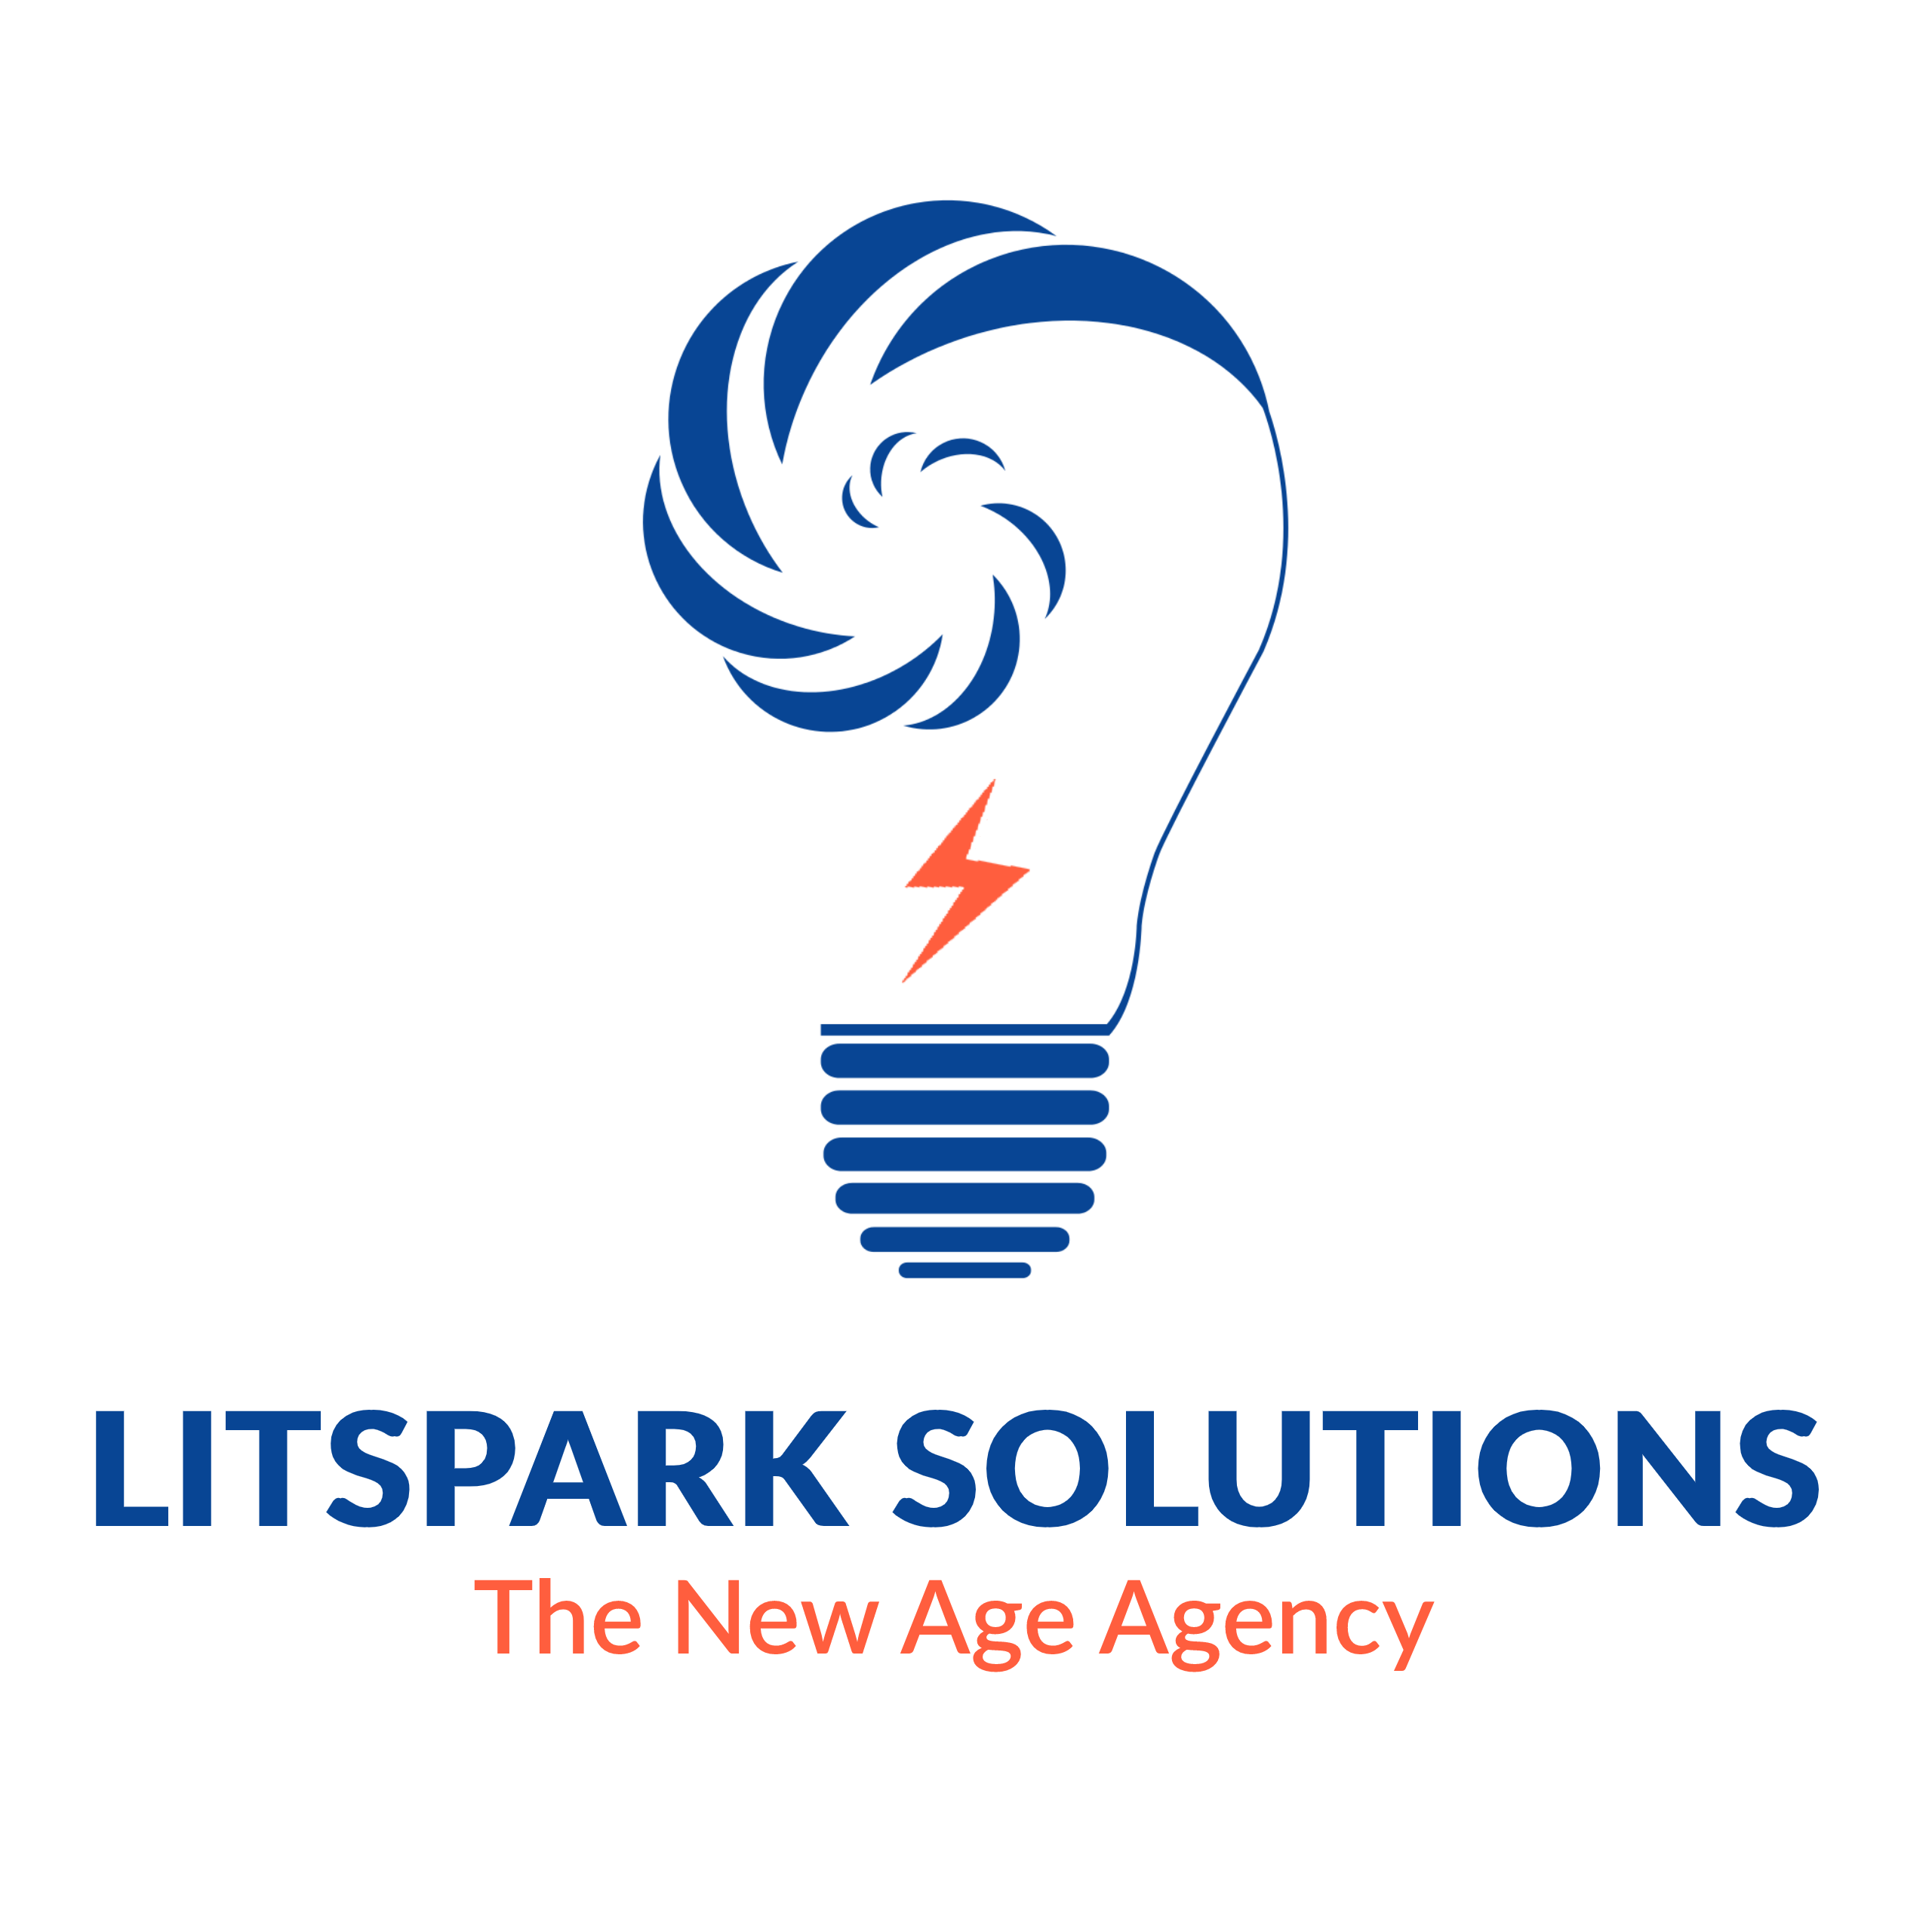 LitSpark Solutions